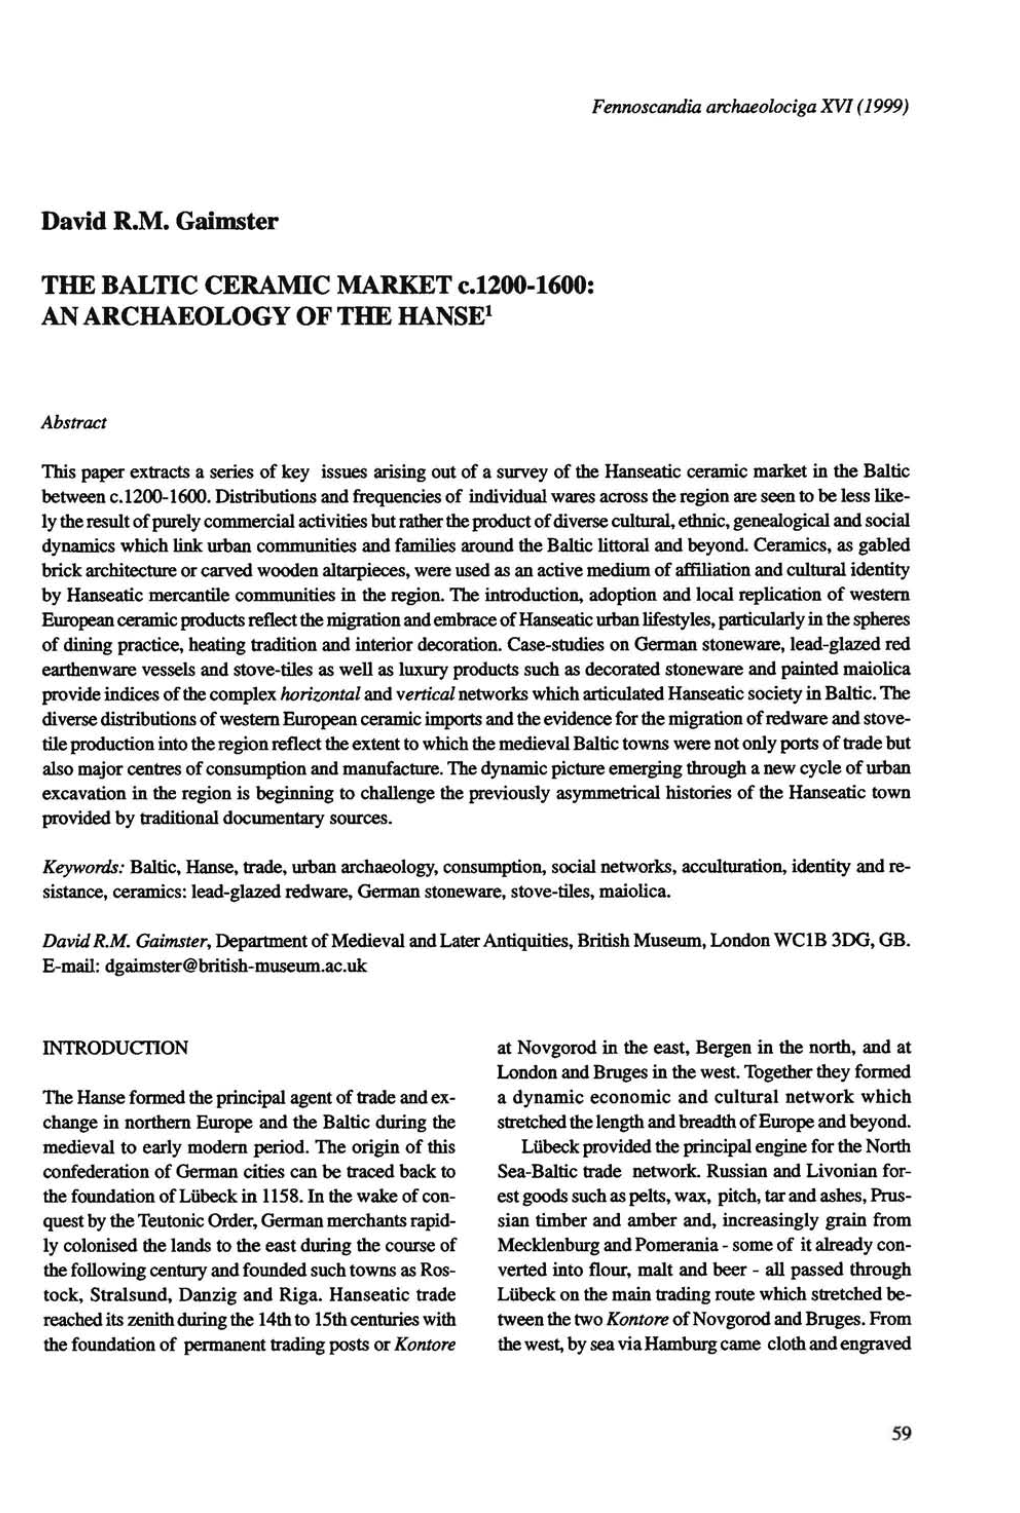 David RM Gaimster the BALTIC CERAMIC MARKET C.1200-1600